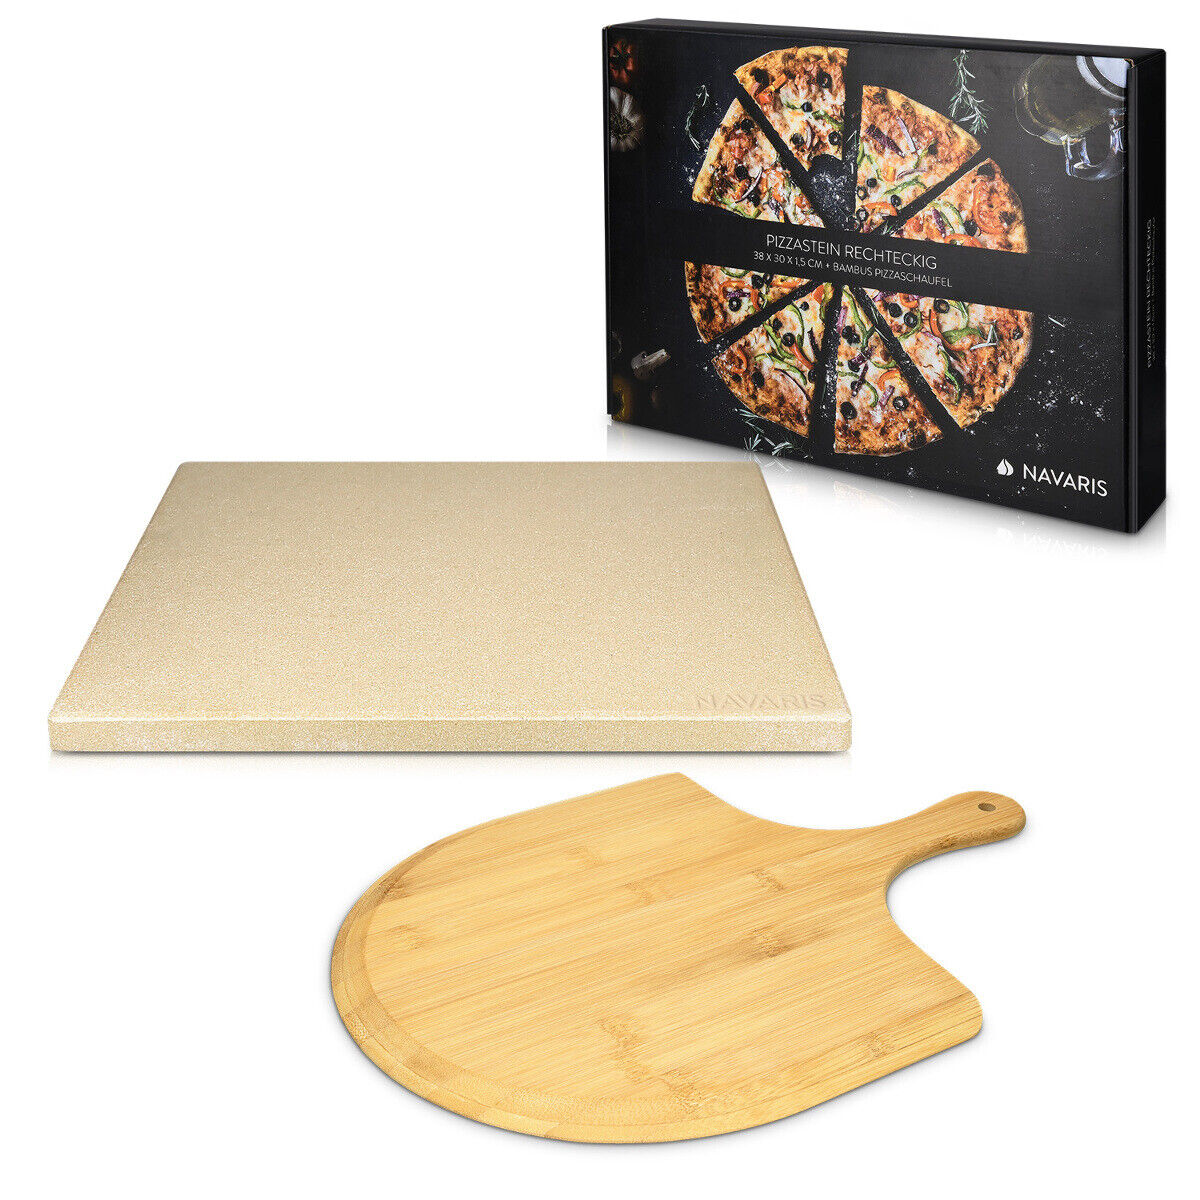 Navaris Pietra Refrattaria per Pizza Pane Teglia Cordierite 800° e Pala Bambù